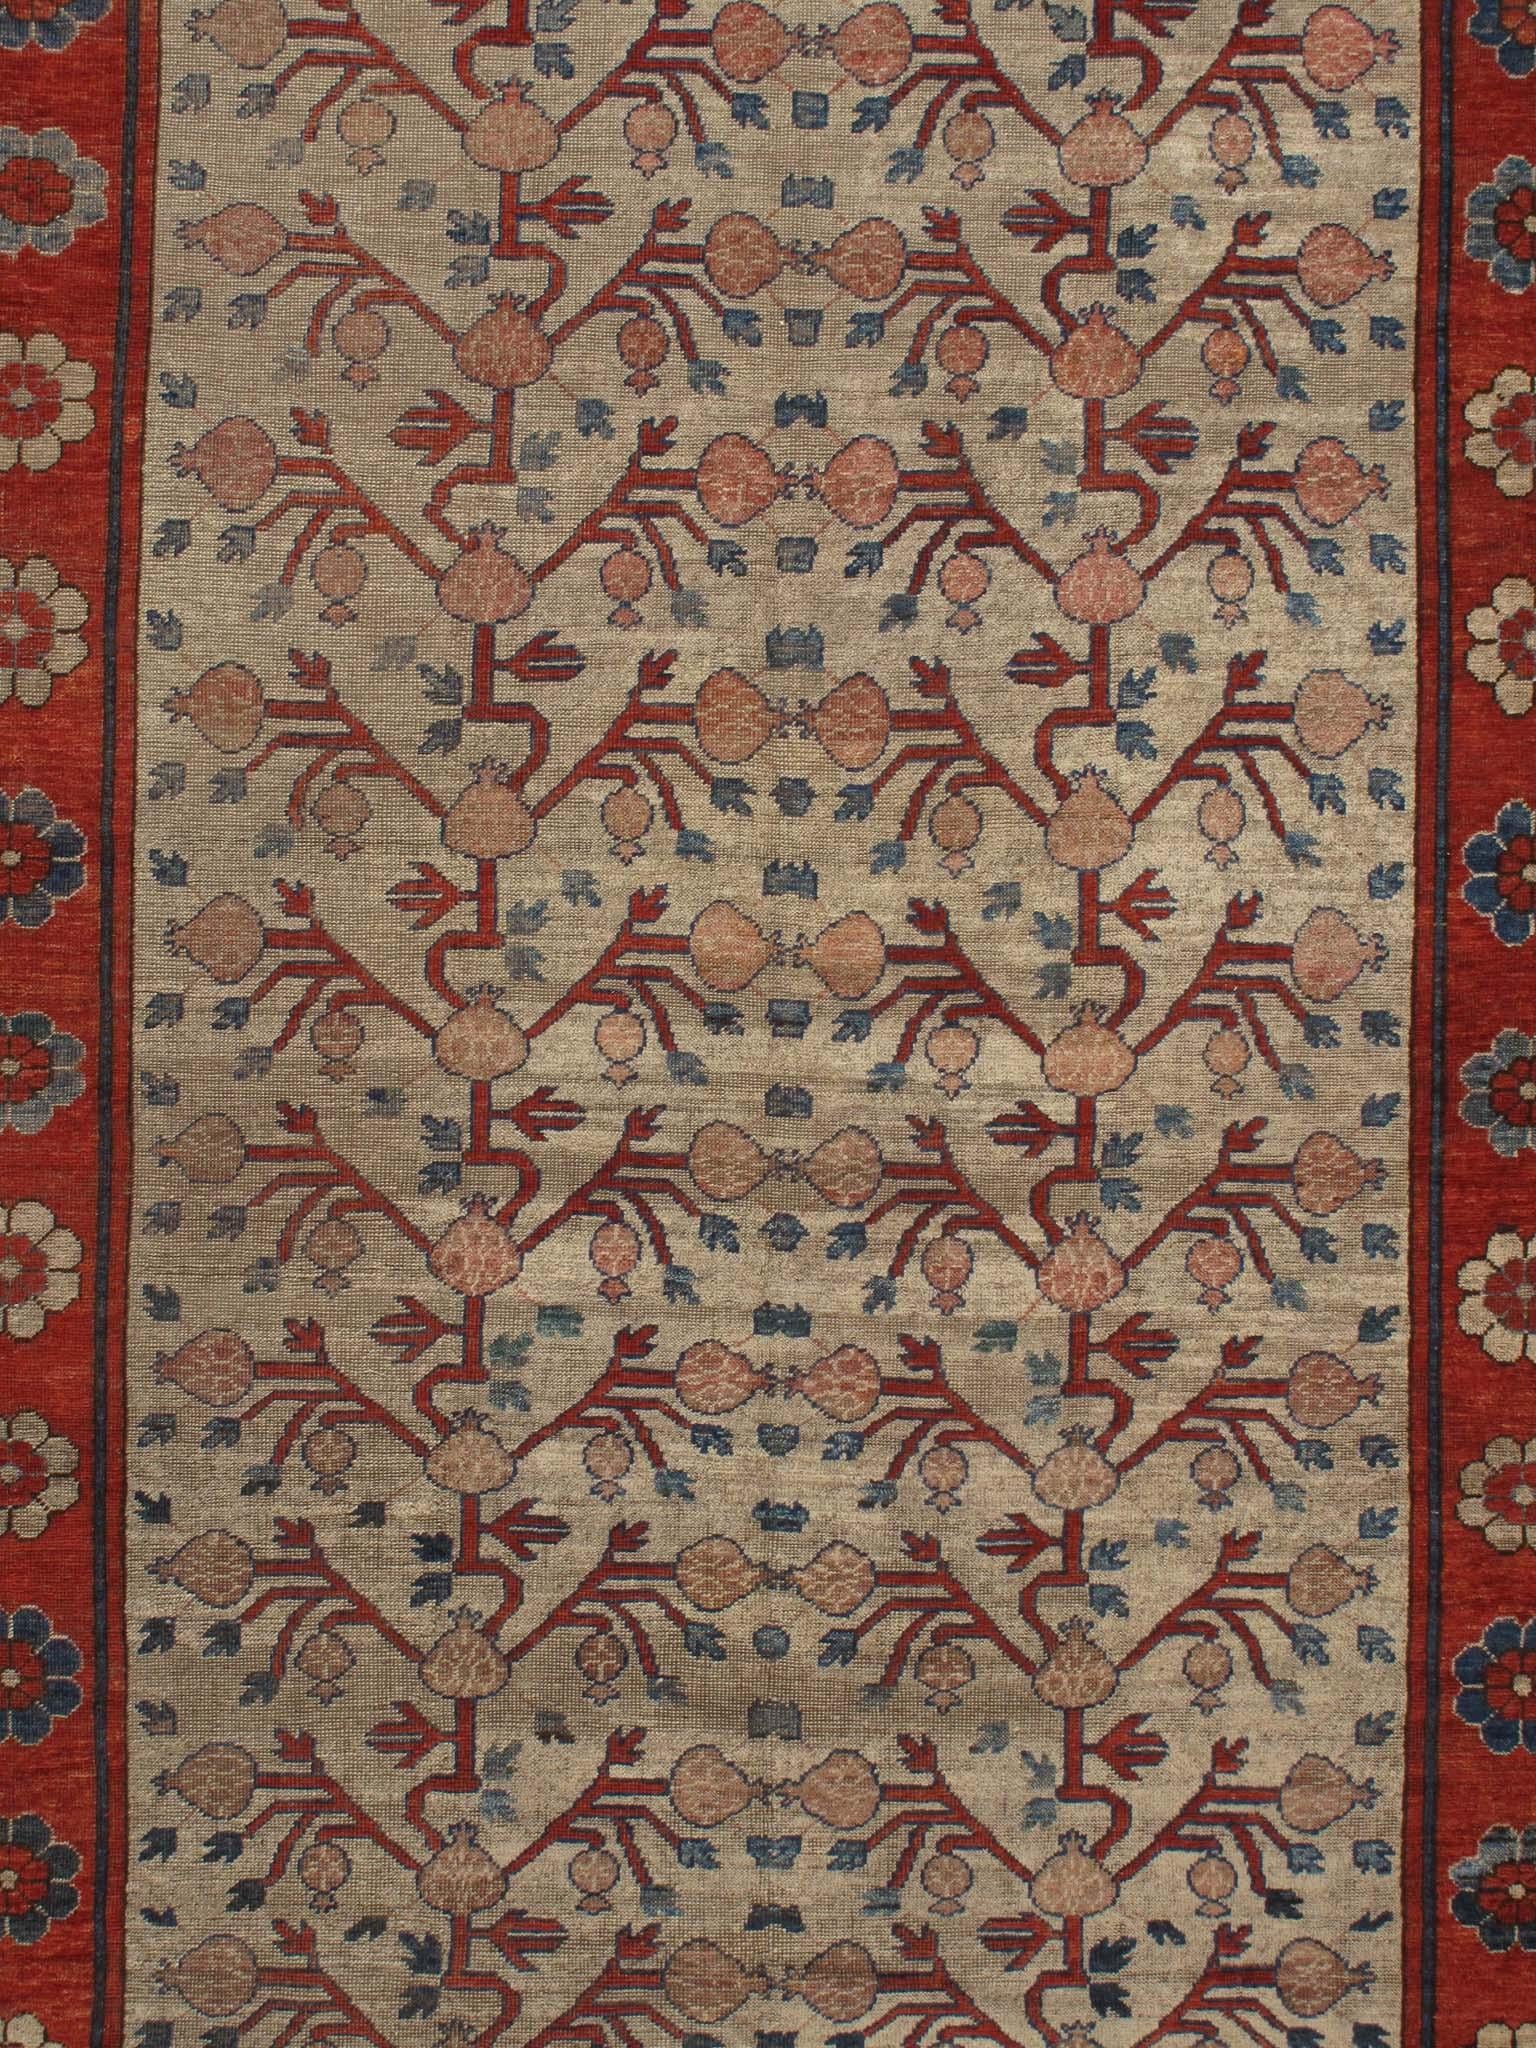 Hand-Woven Antique Khotan Samarkand Rug, 6'3 x 12'3 For Sale